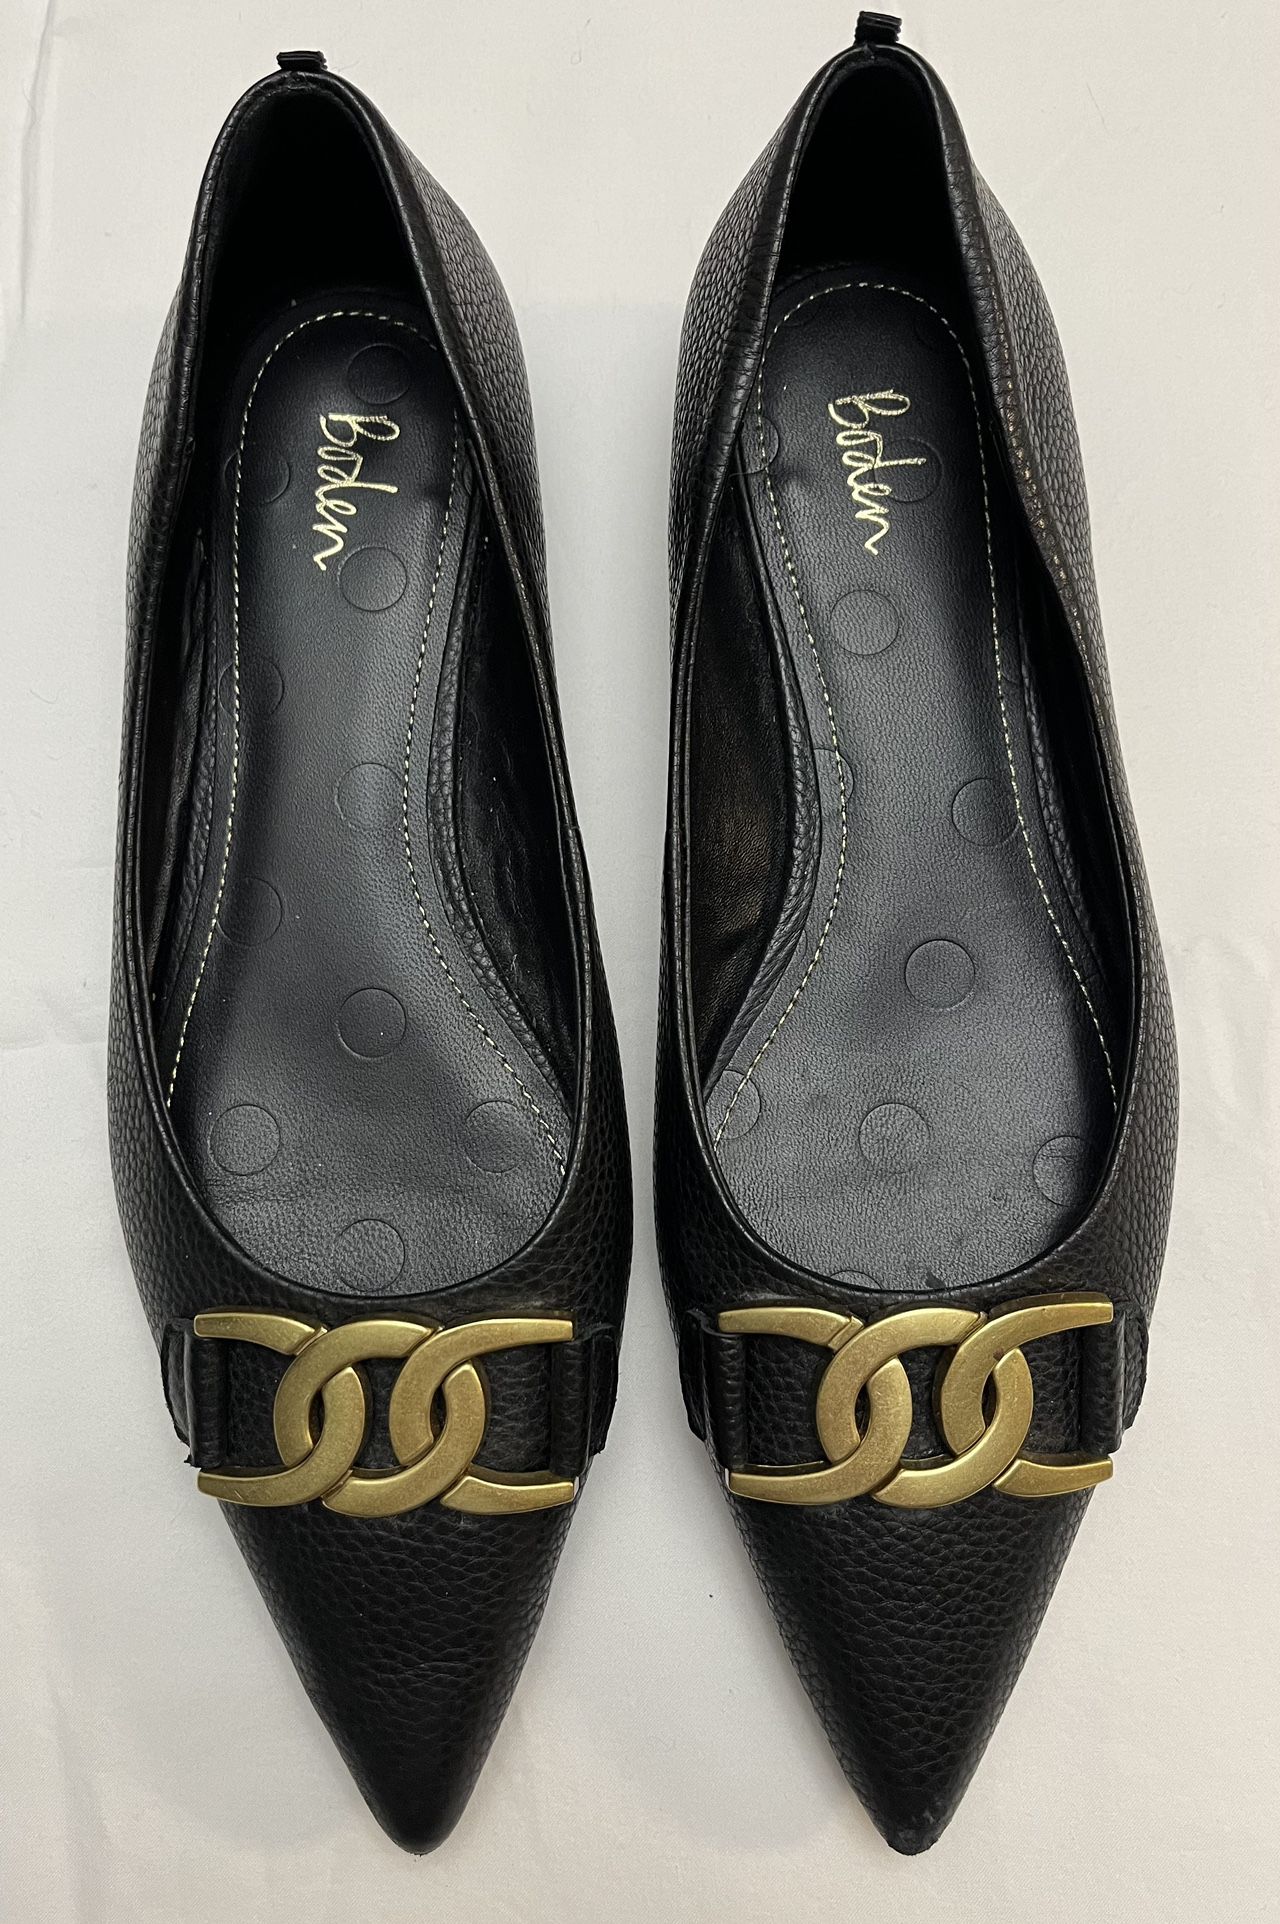 Boden Woman’s Black Dress Shoes Gold Buckle Flats